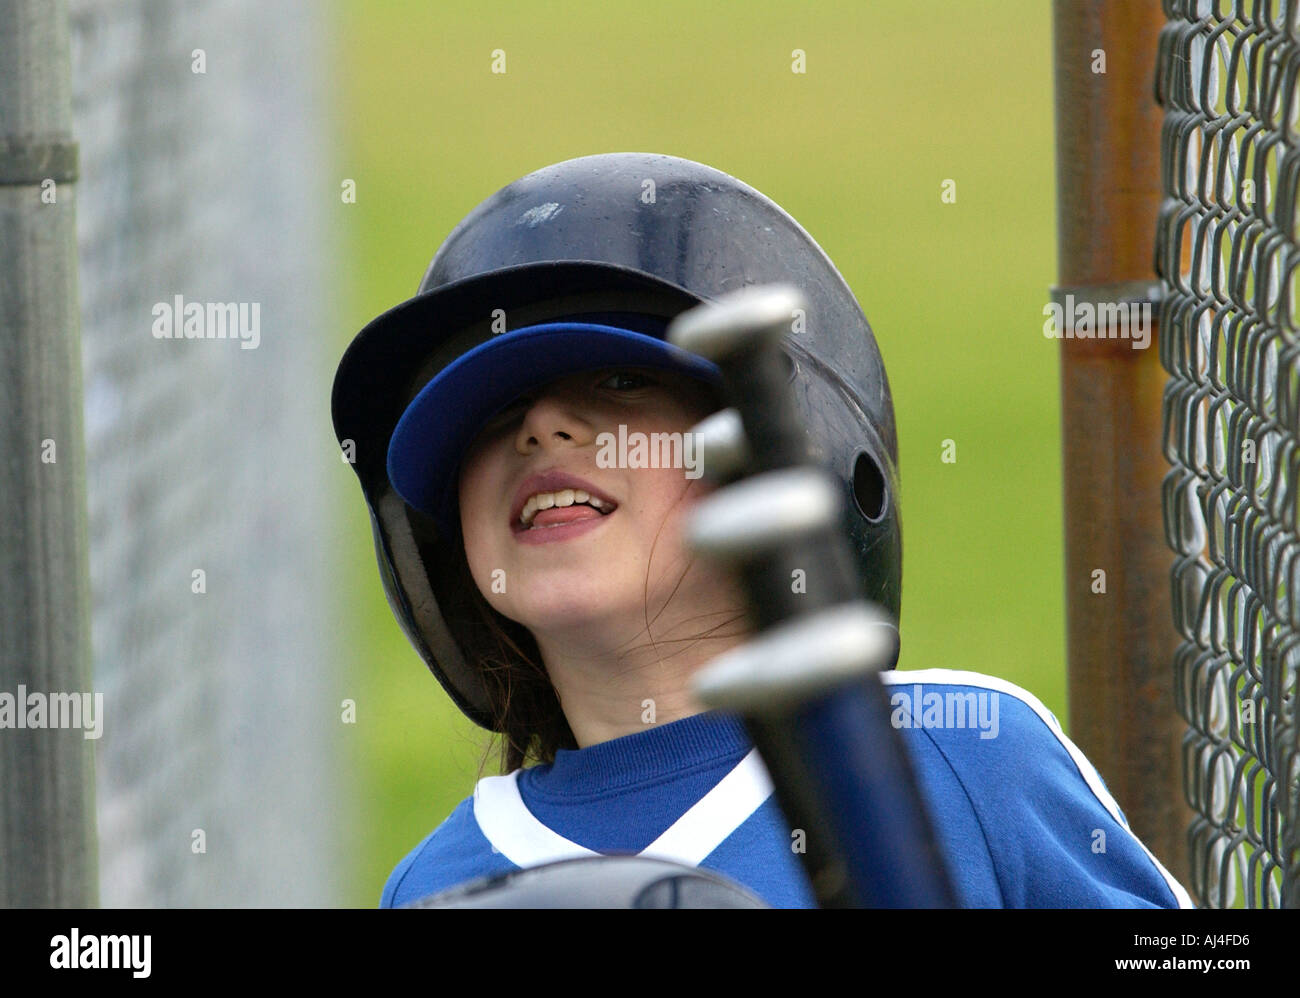 Kind mit übergroßen Baseball Helm Stockfoto